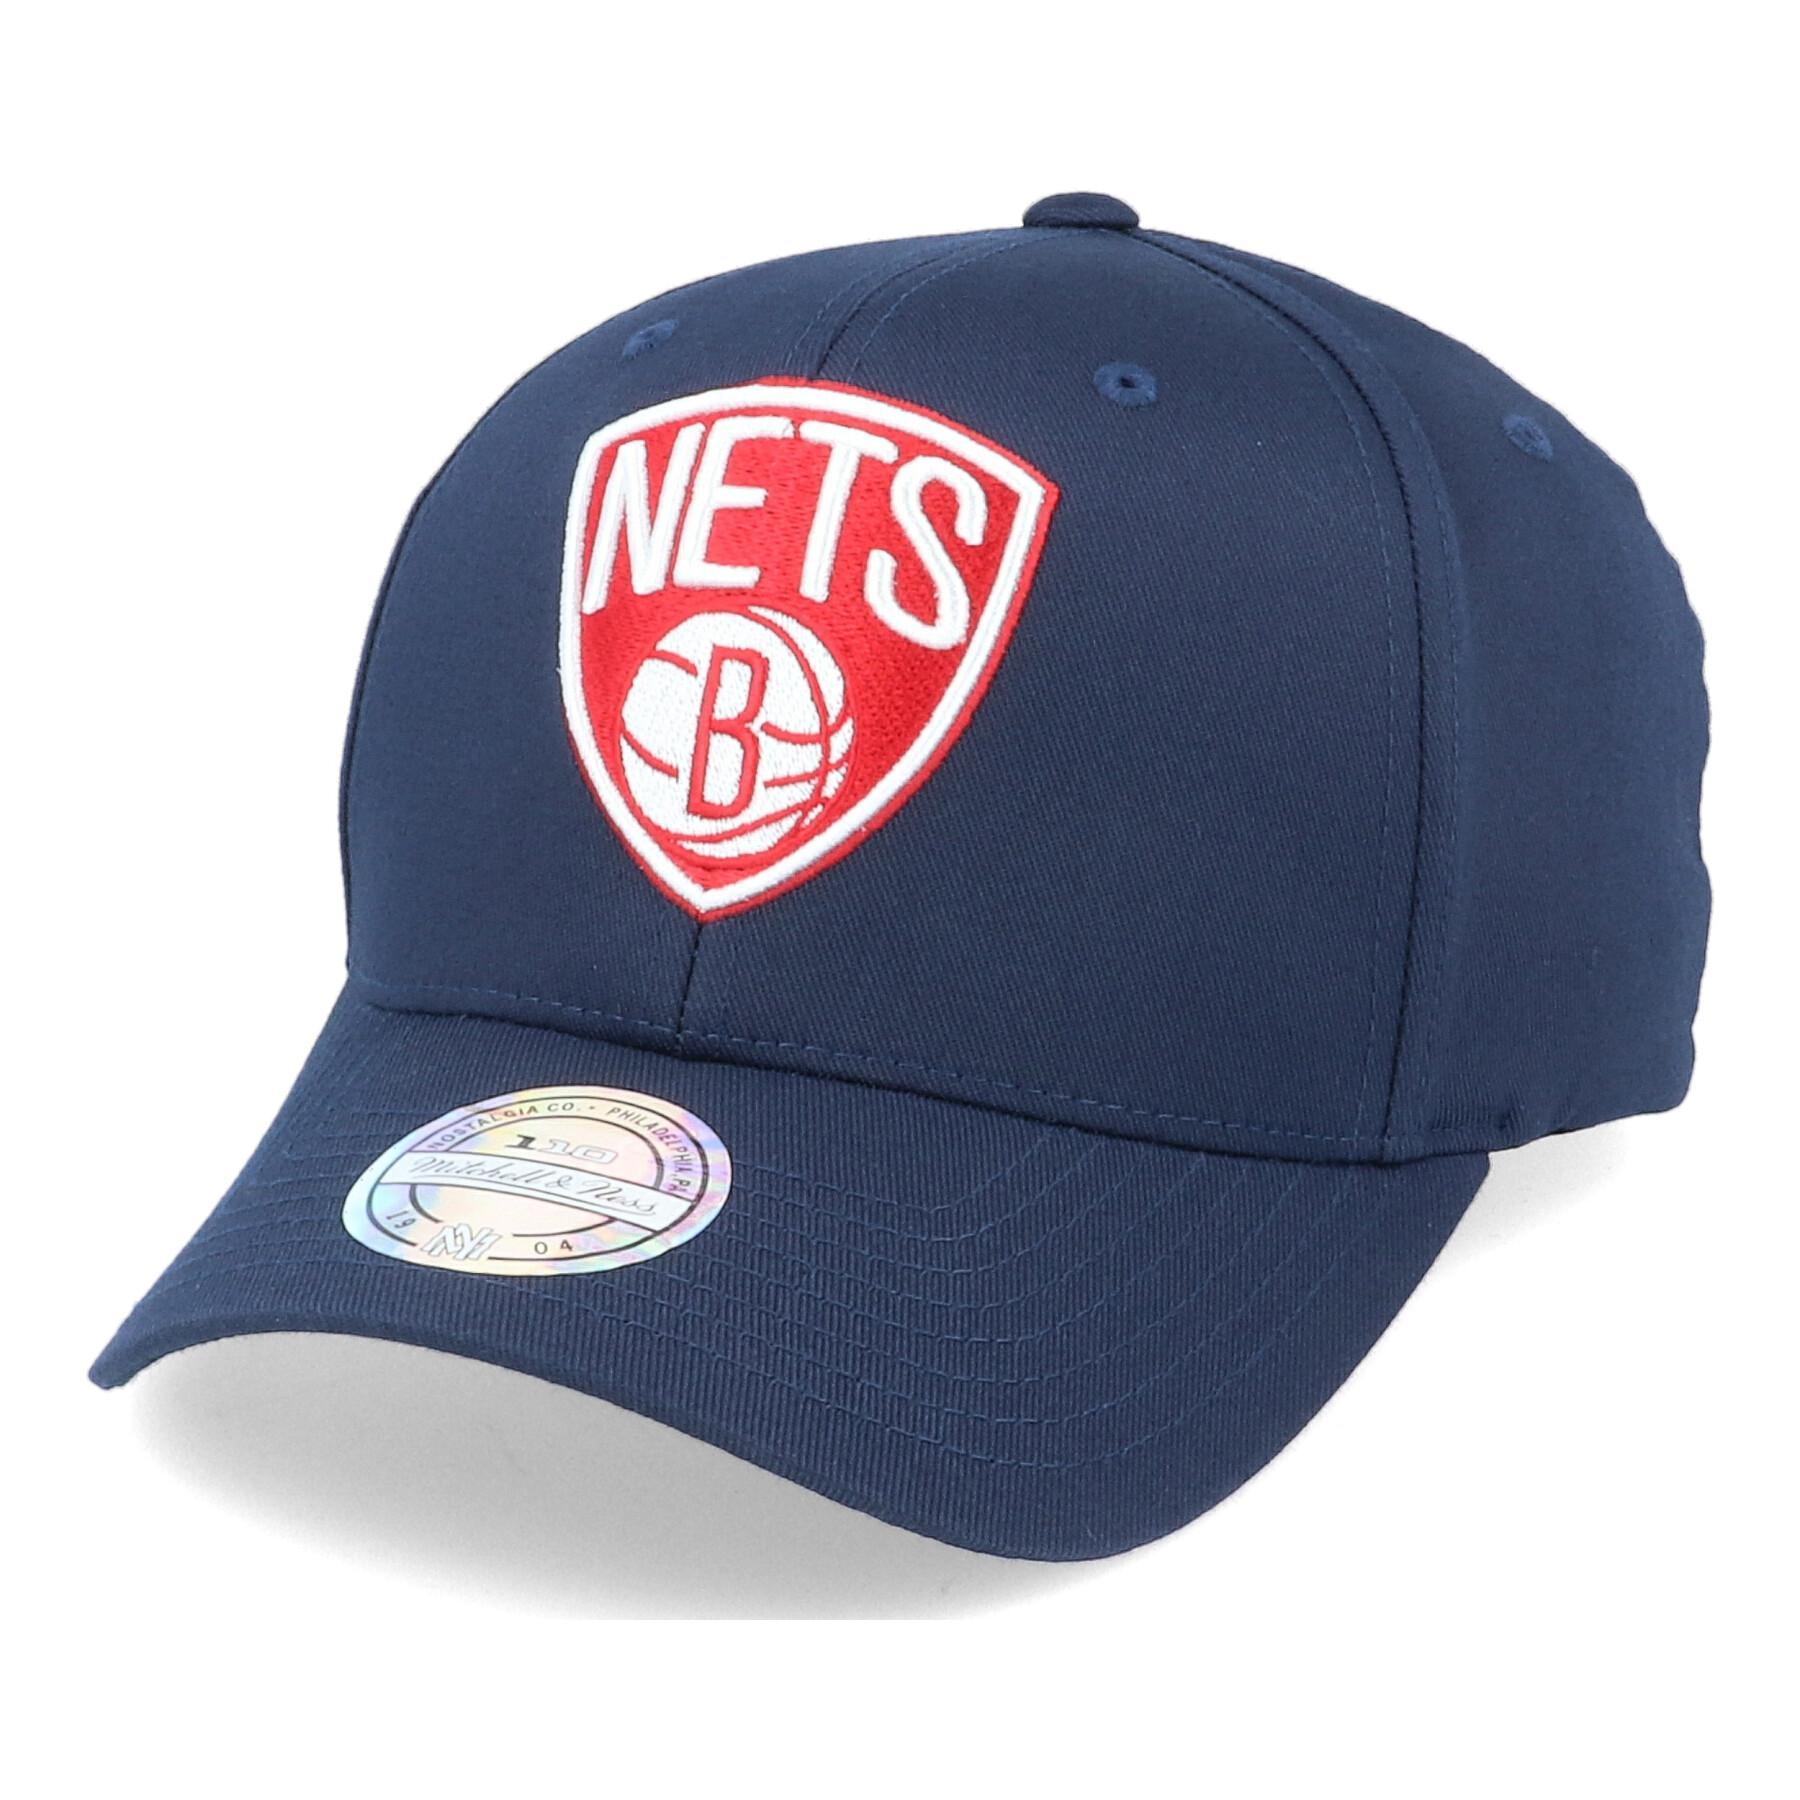 Kapsyl Brooklyn Nets navy/red/white 110